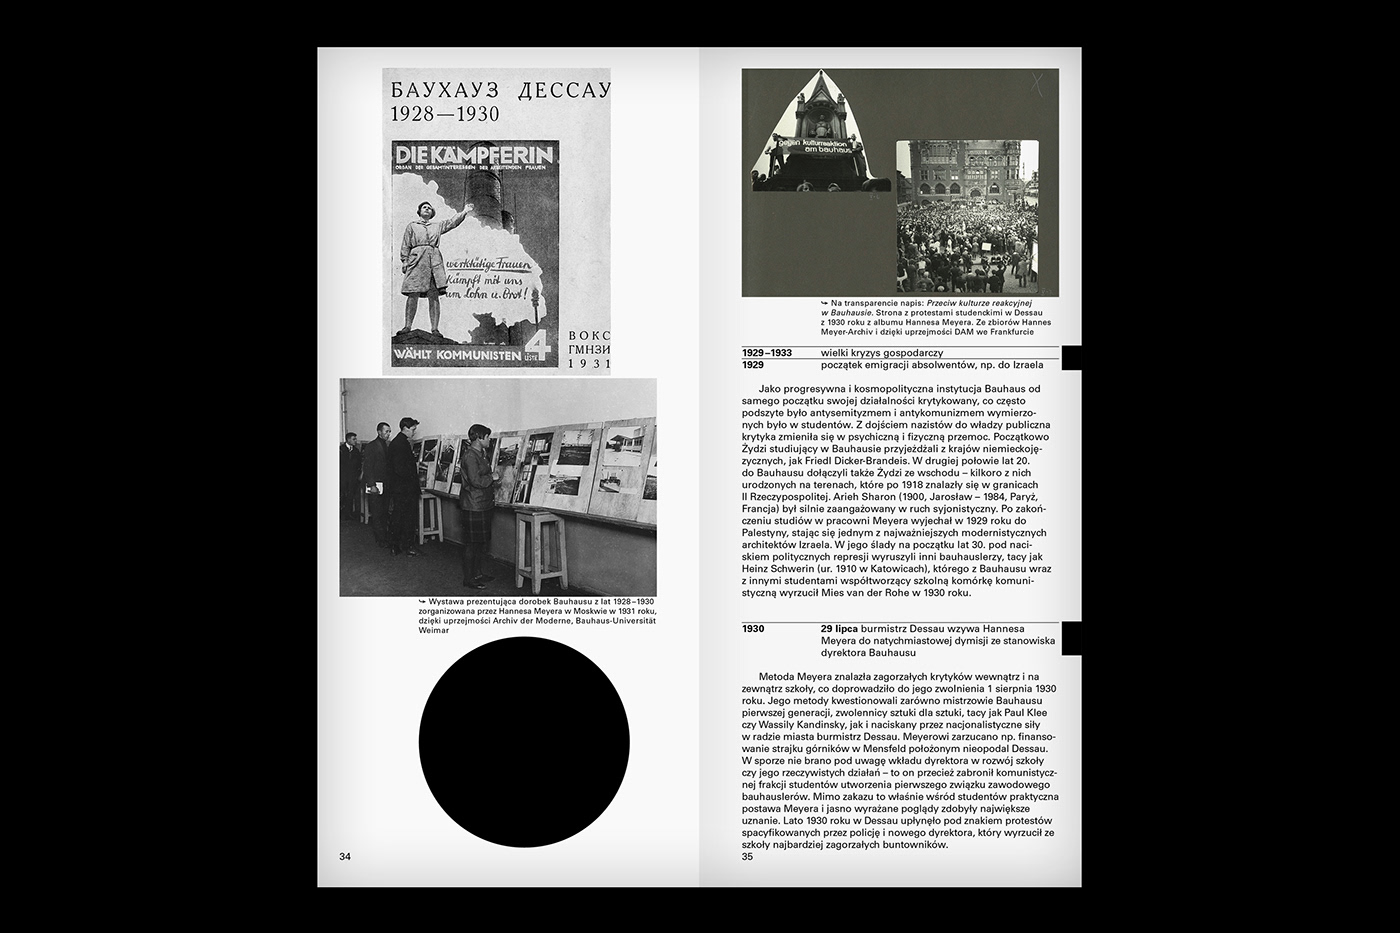 bauhaus Bauhauscentenary #bauhausdesign #bauhaus100 #100jahrebauhaus #bauhausstil waltergropius Exhibition  artexhibition identity